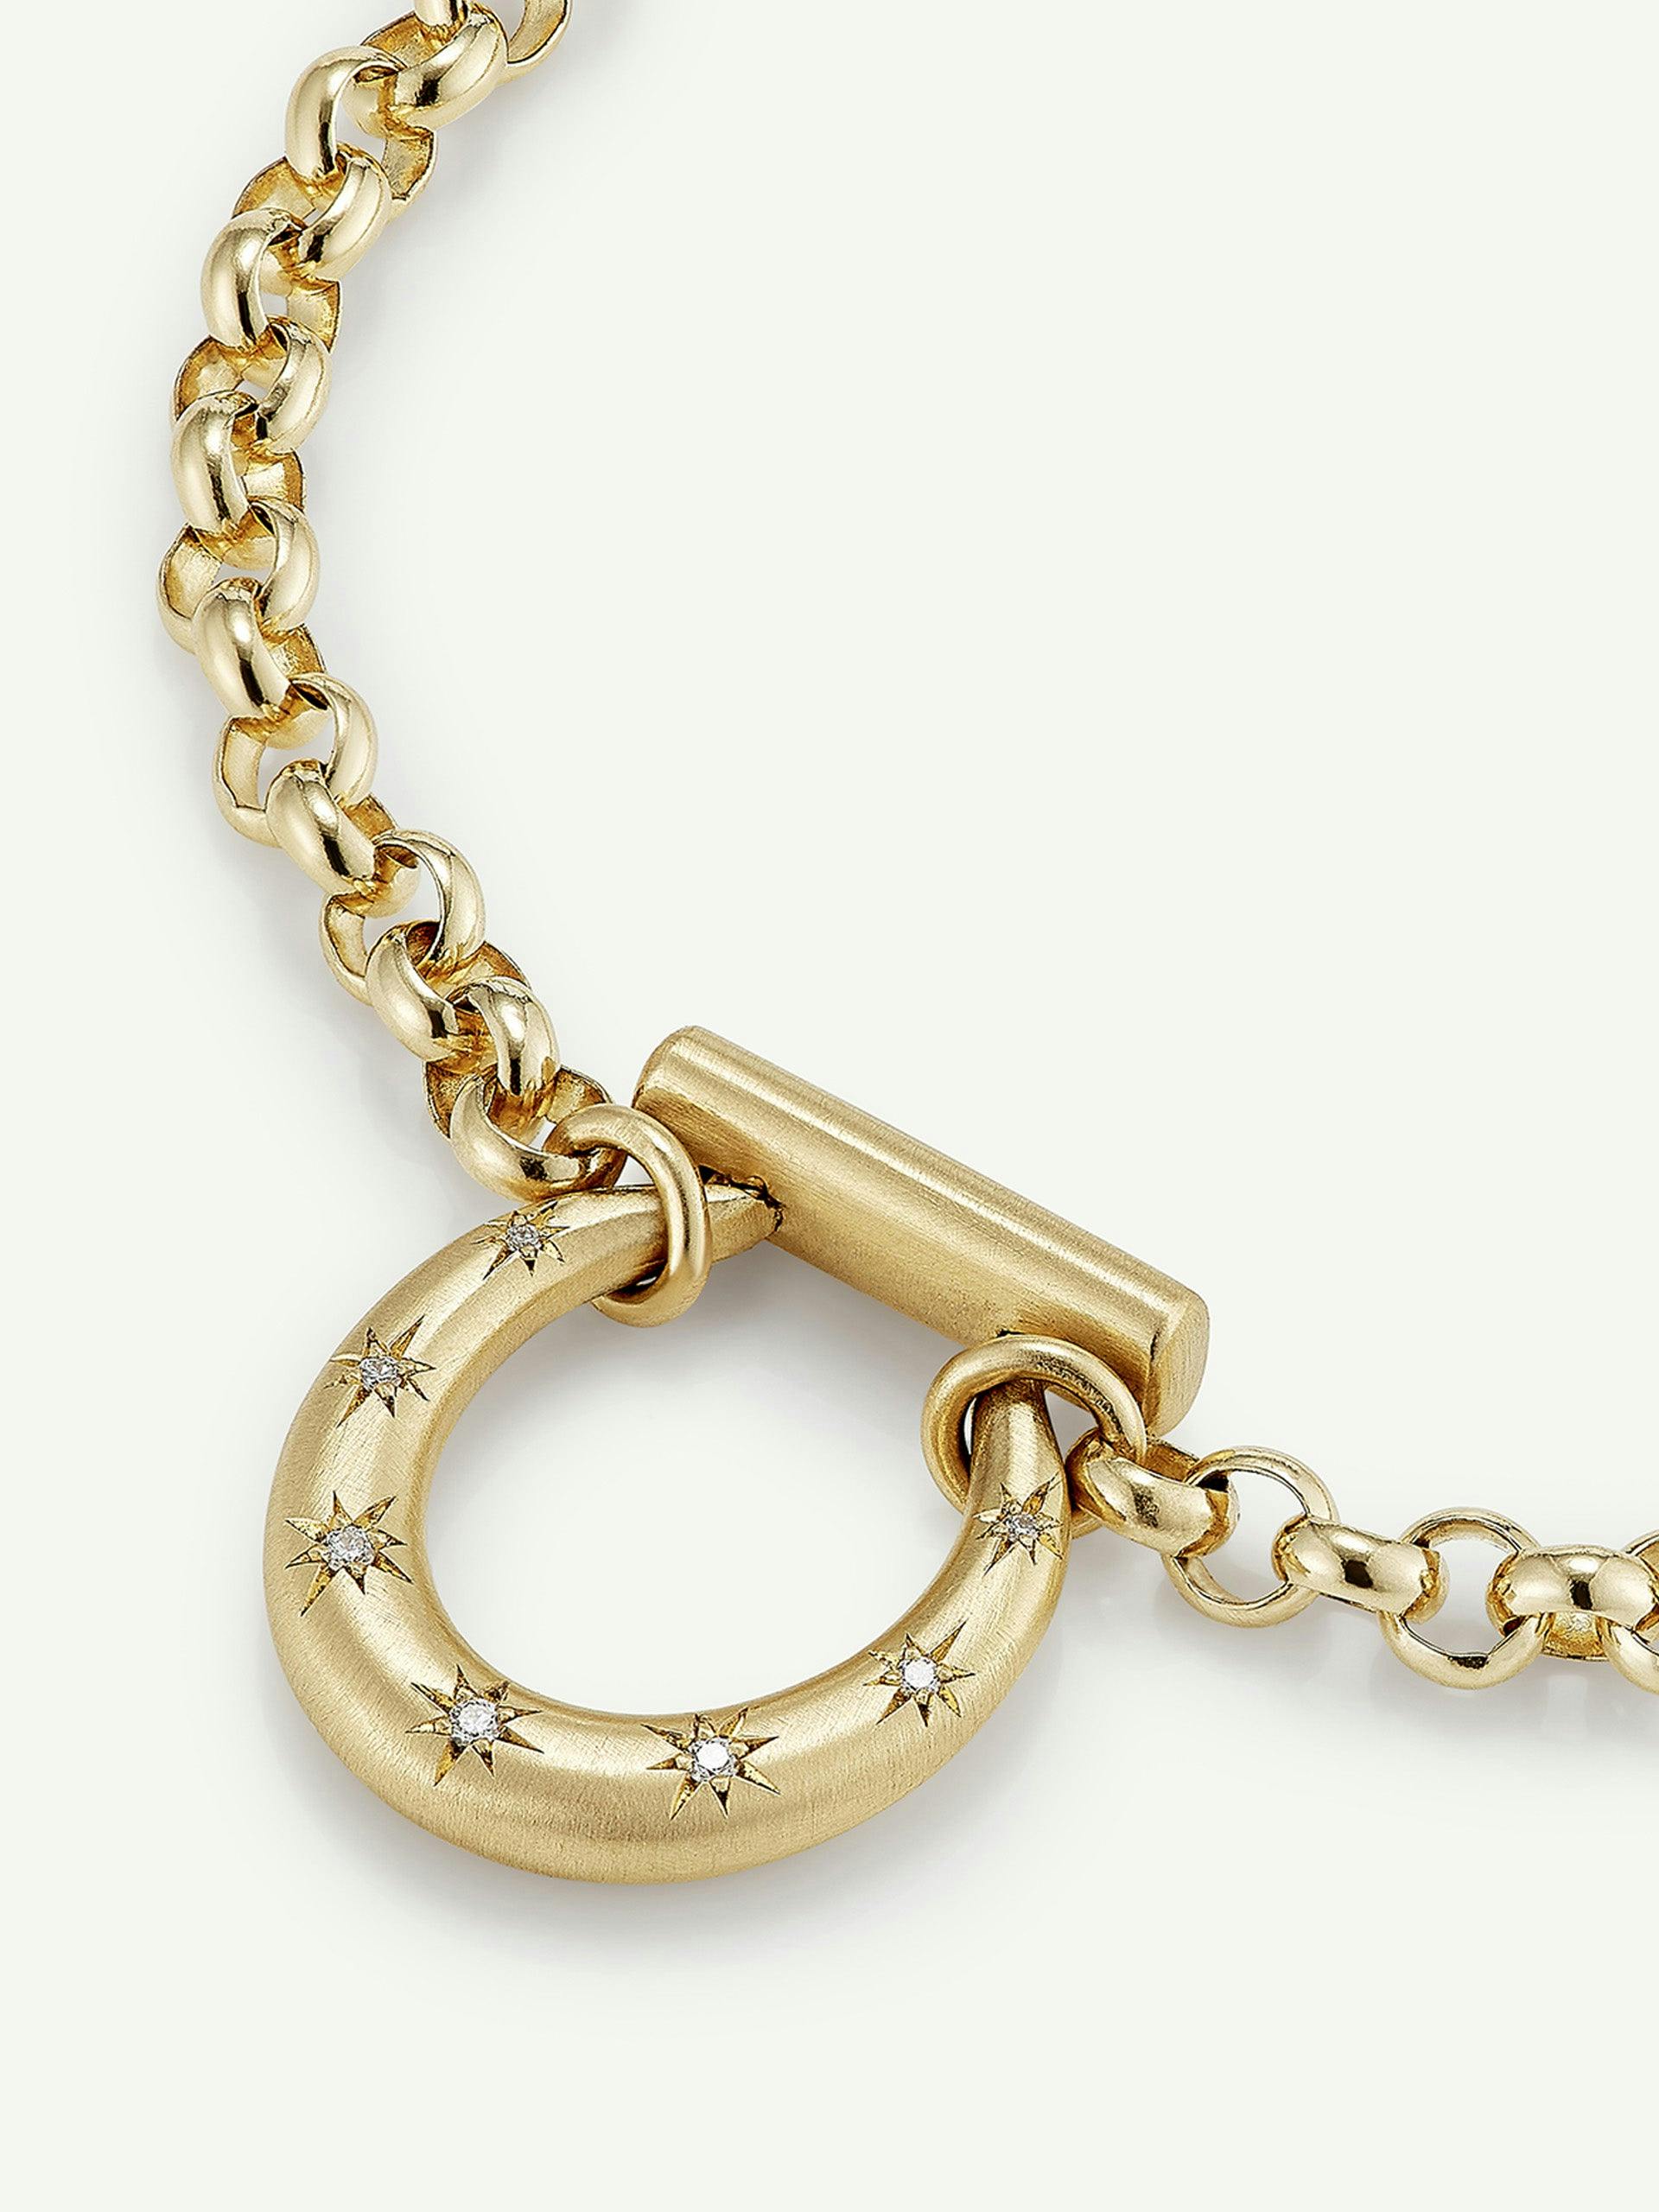 Horseclip necklace